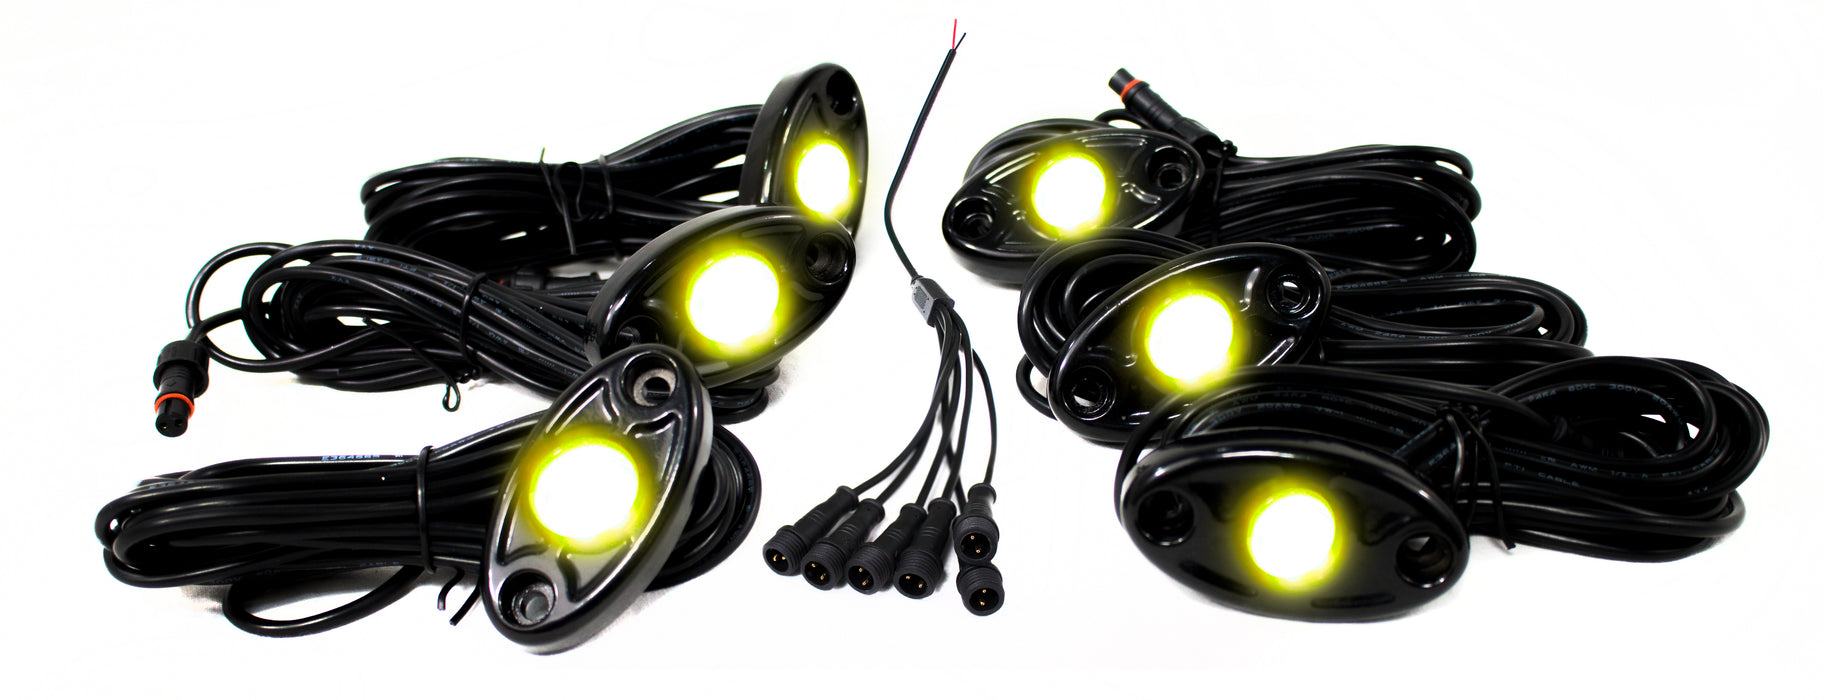 6 LED Glow Pod Kit w/ Brain Box IP68 12V w/ All Hardware (Yellow)